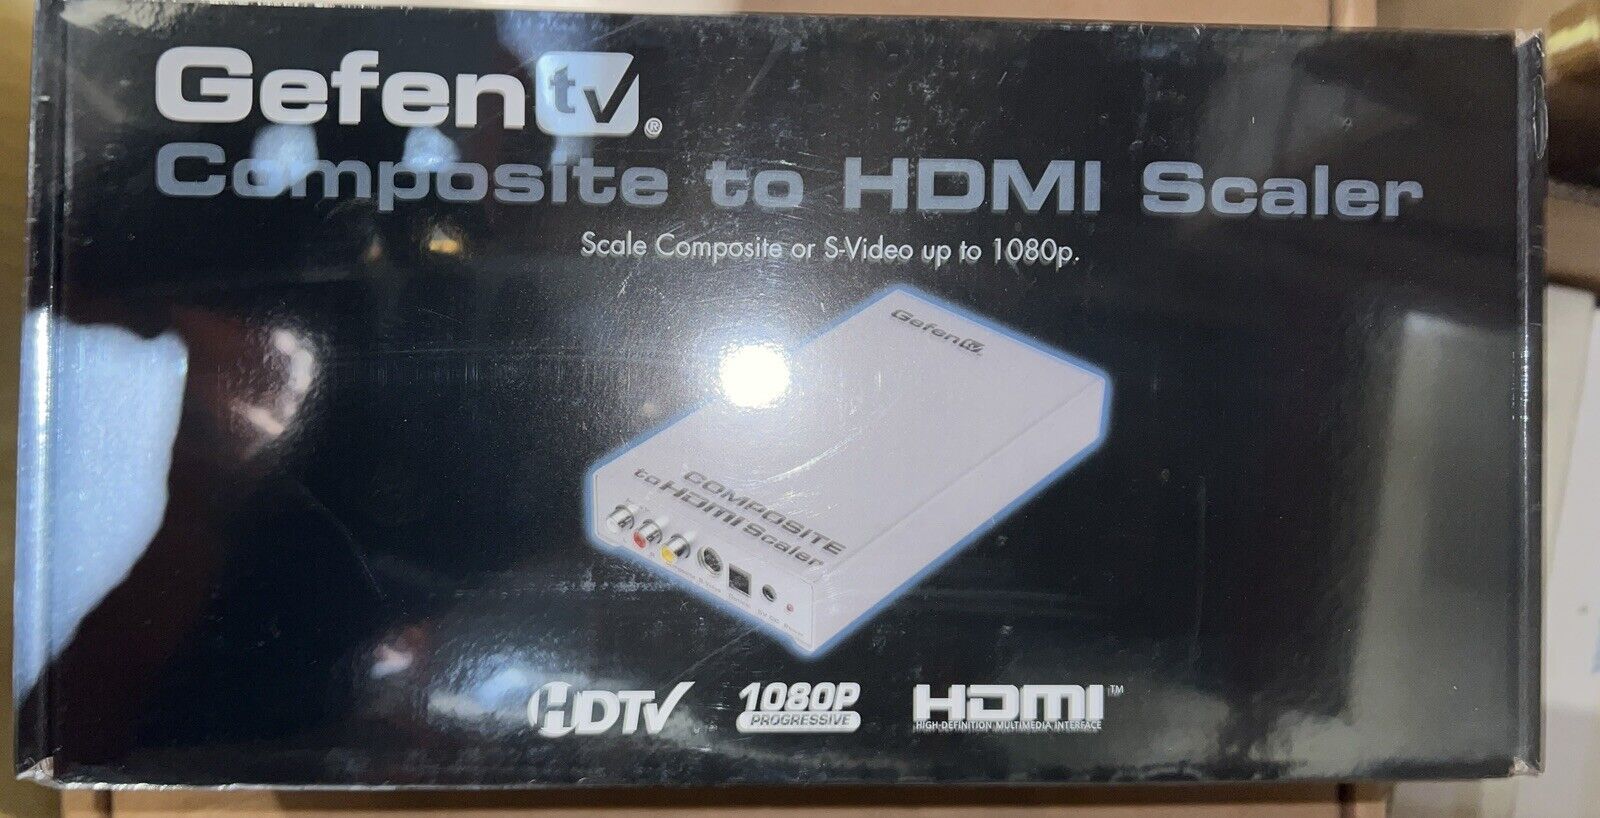 GefenTV Composite to HDMI Scaler